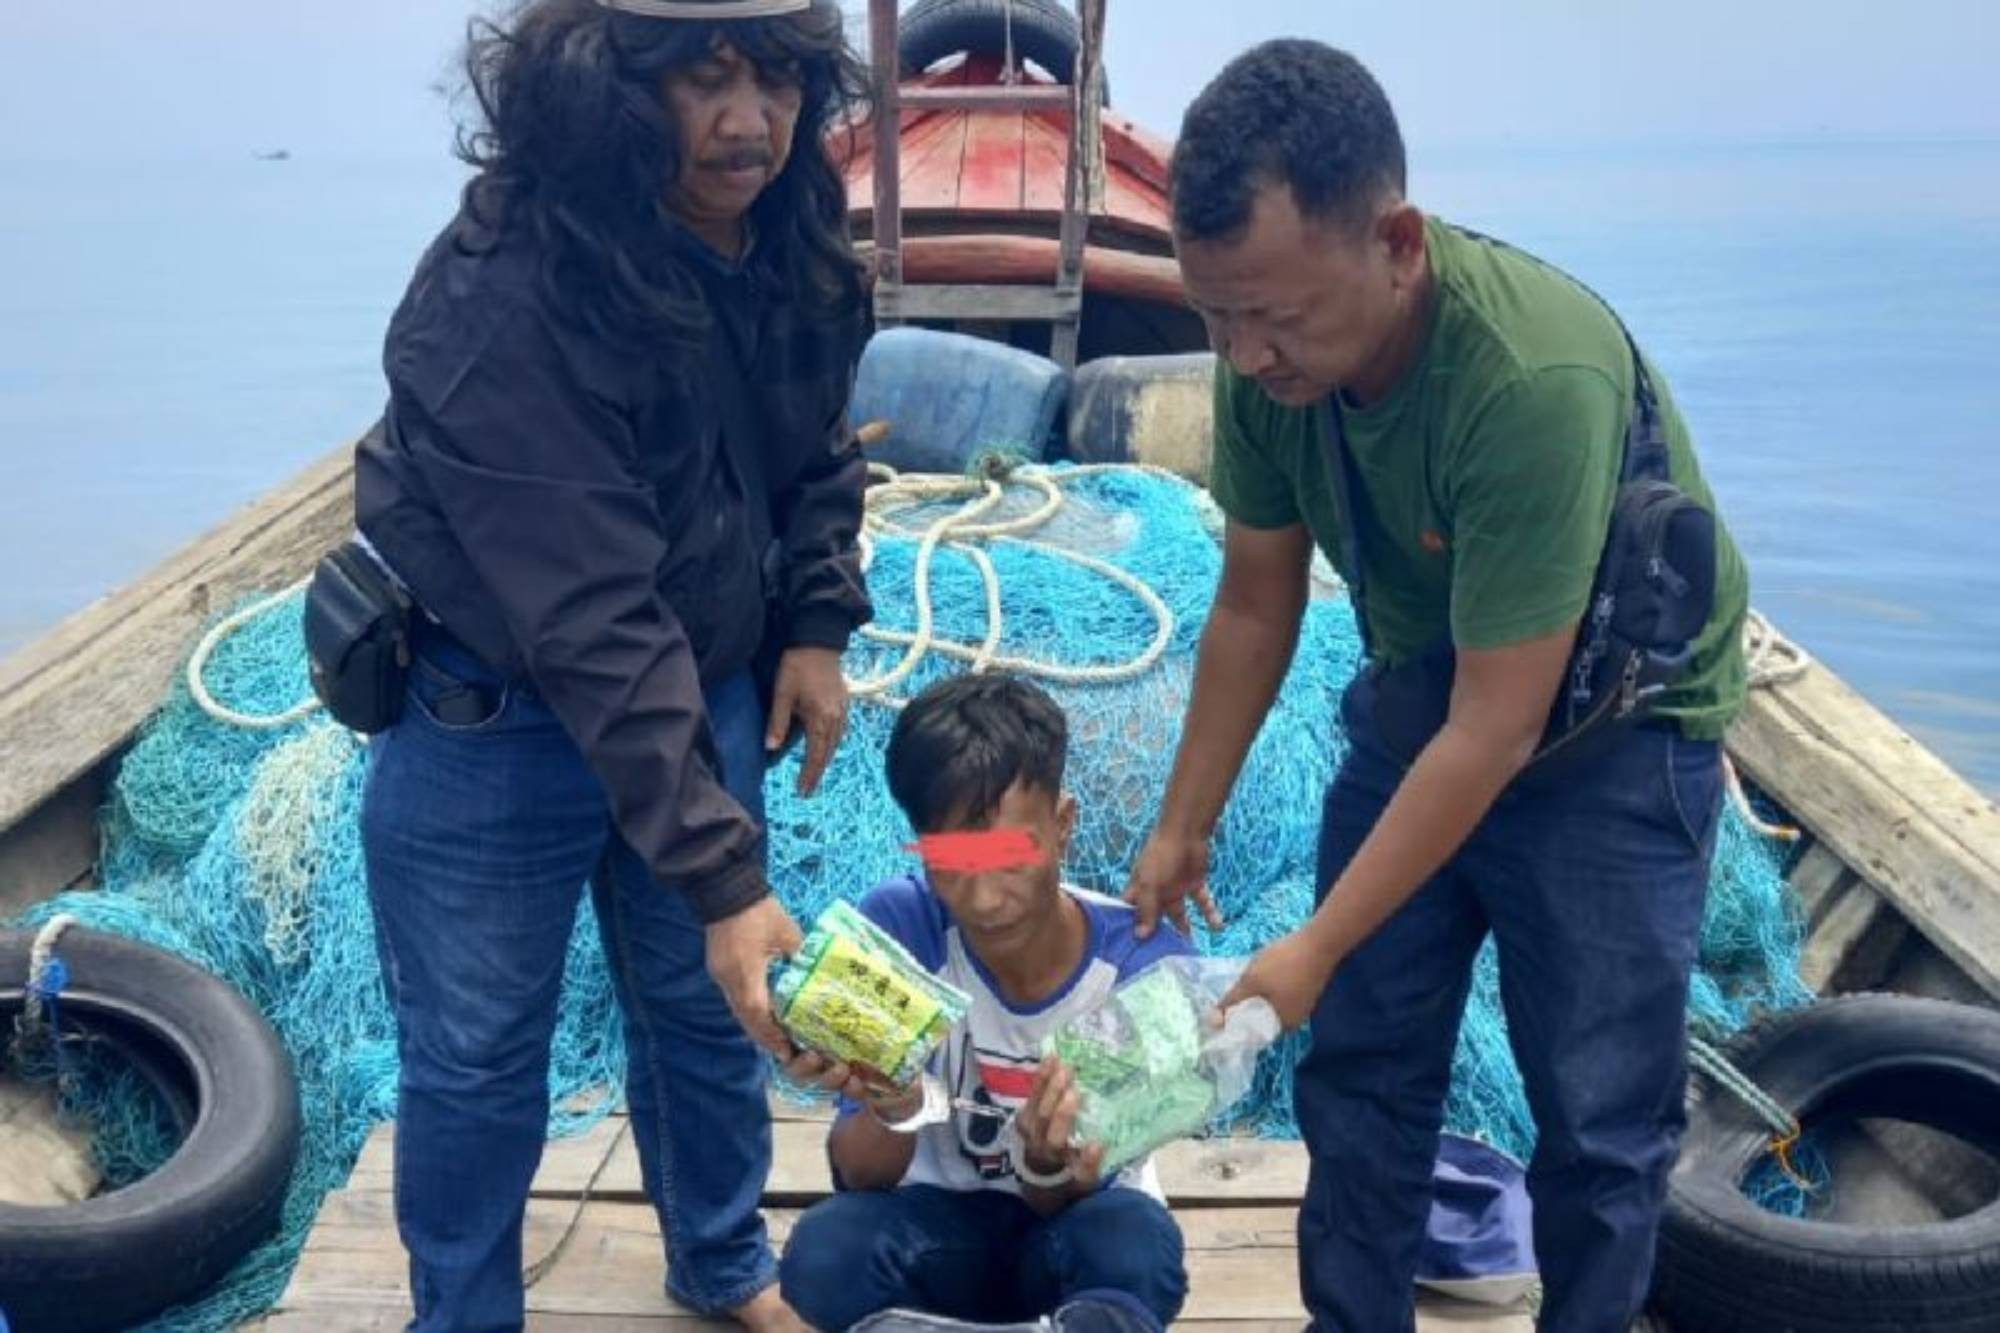 Kurir 2 Kilogram Sabu-Sabu dari Malaysia Ditangkap Polda Sumut - JPNN.com